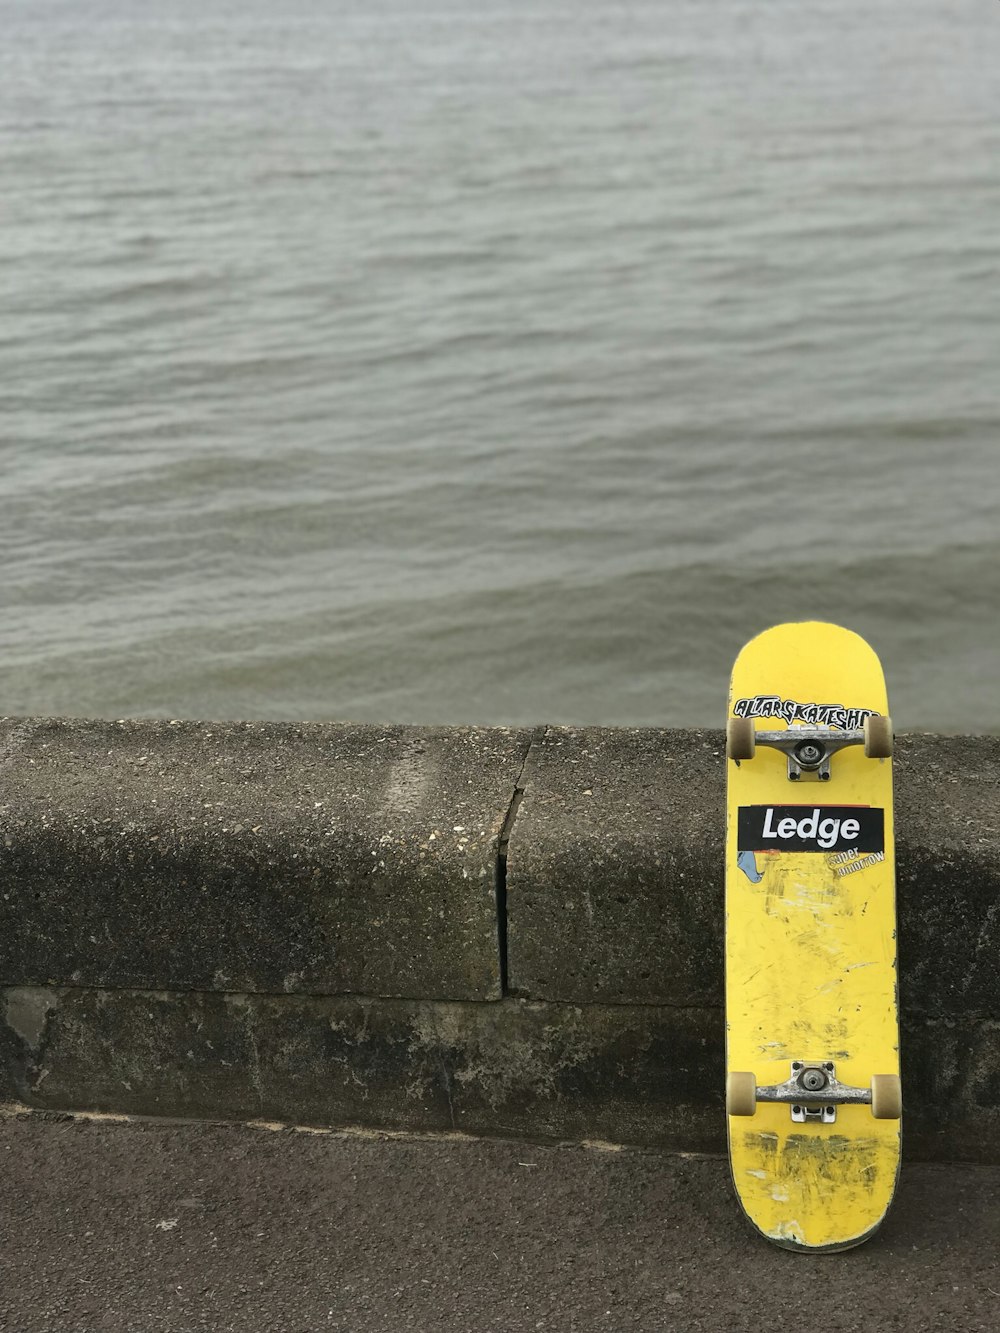 yellow Ledge skateboard near body of water photo – Free Southend-on-sea  Image on Unsplash